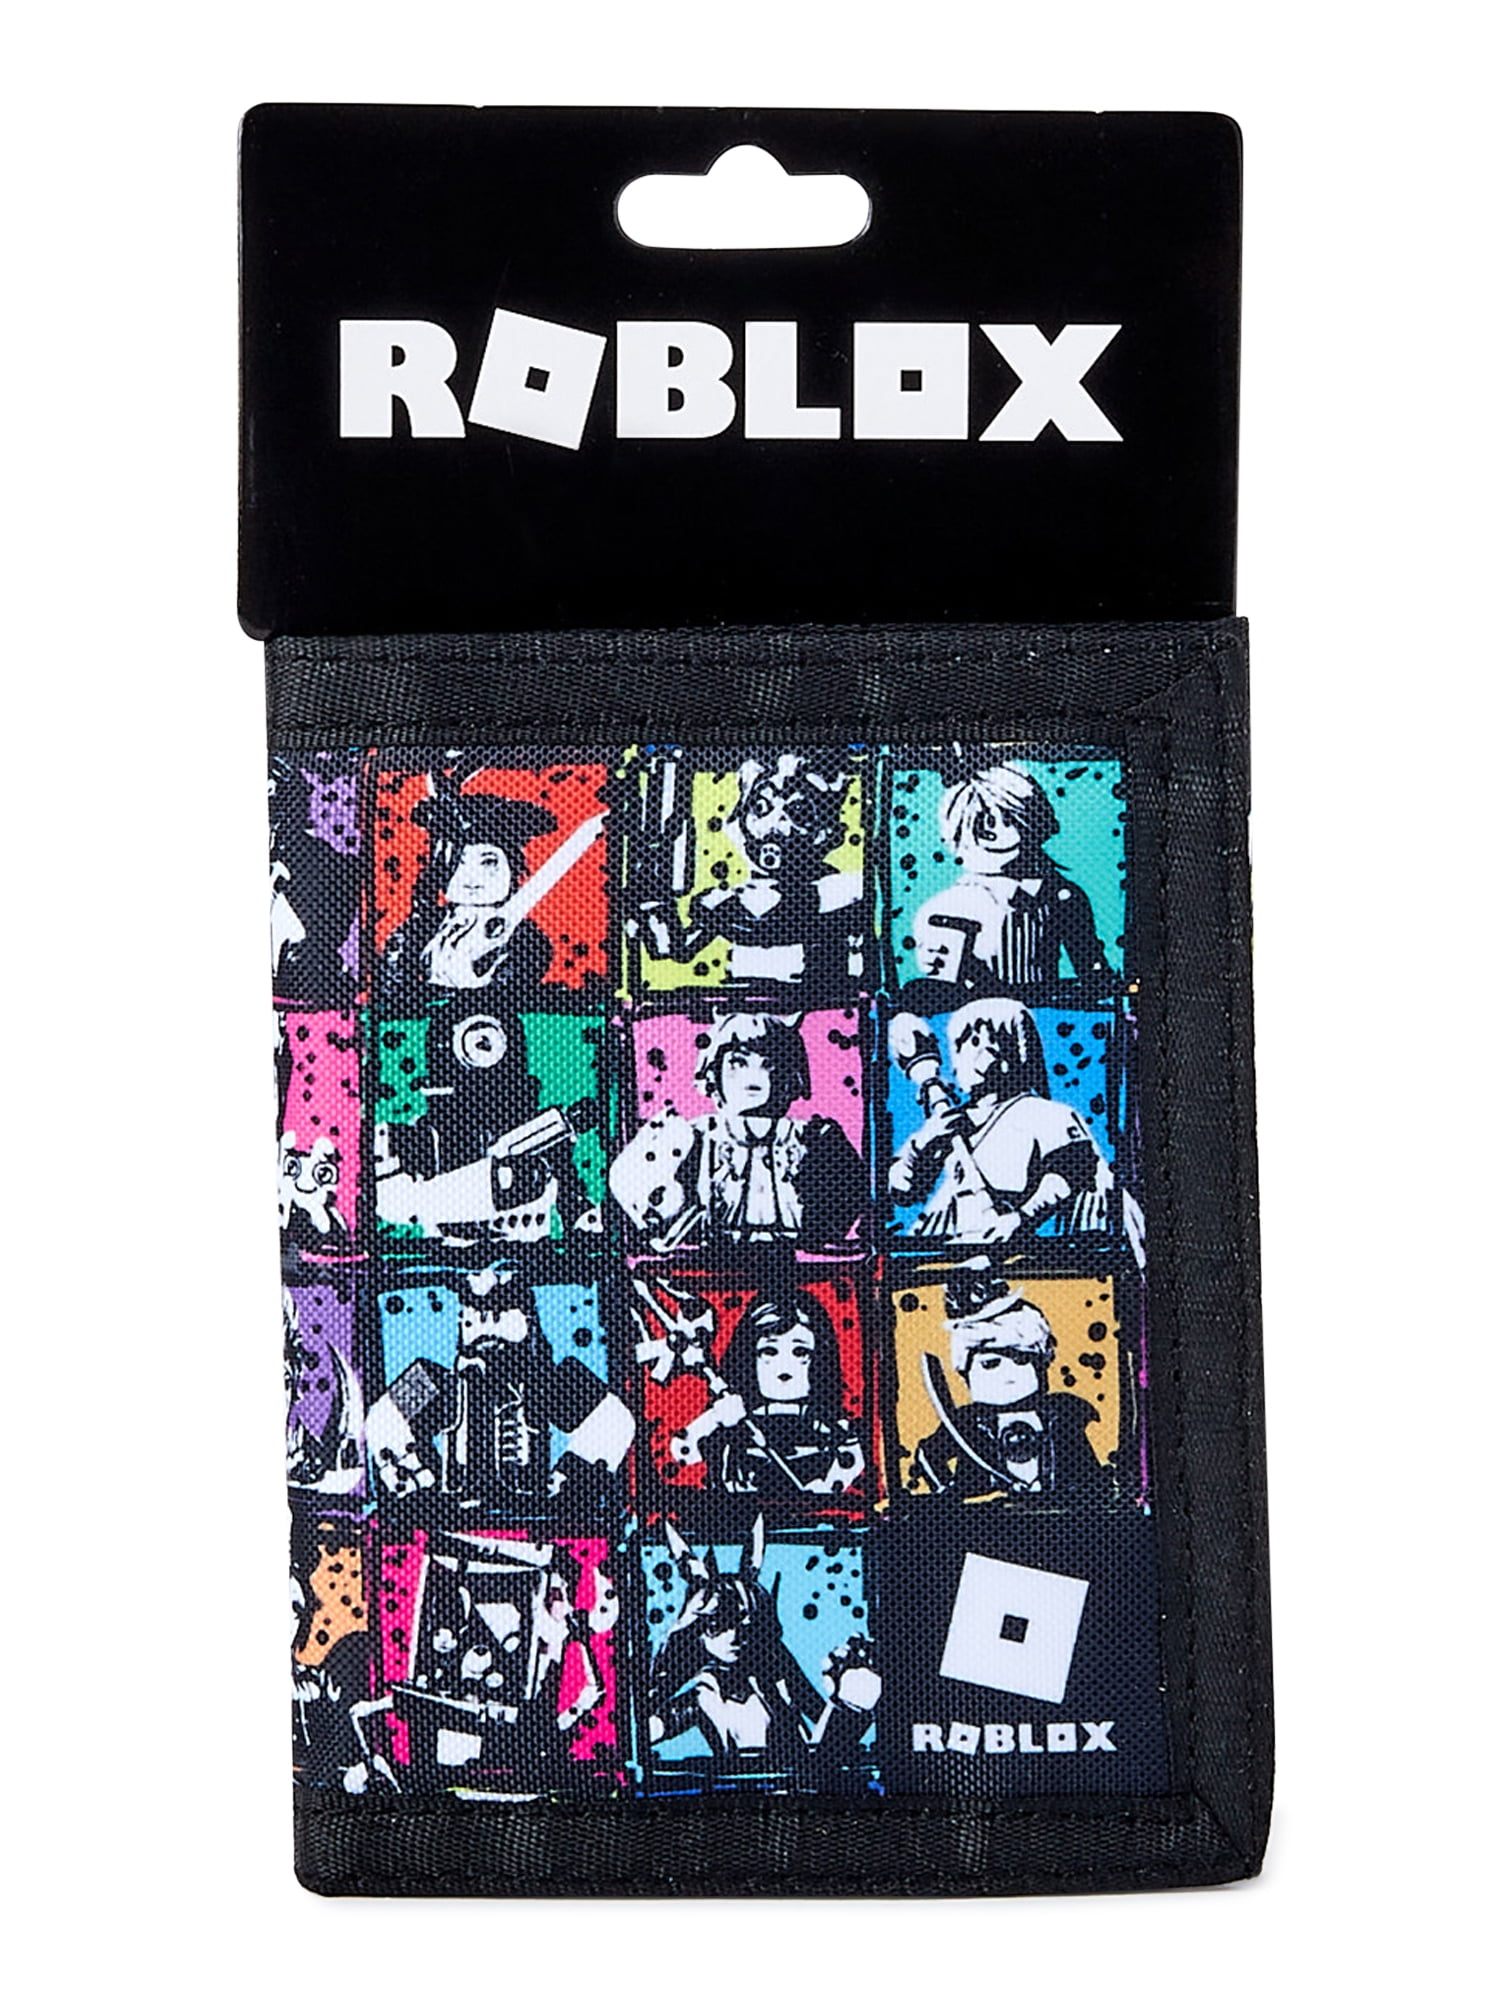 Roblox Wallet Black Simple Fashion Trend Student Wallet Cartoon